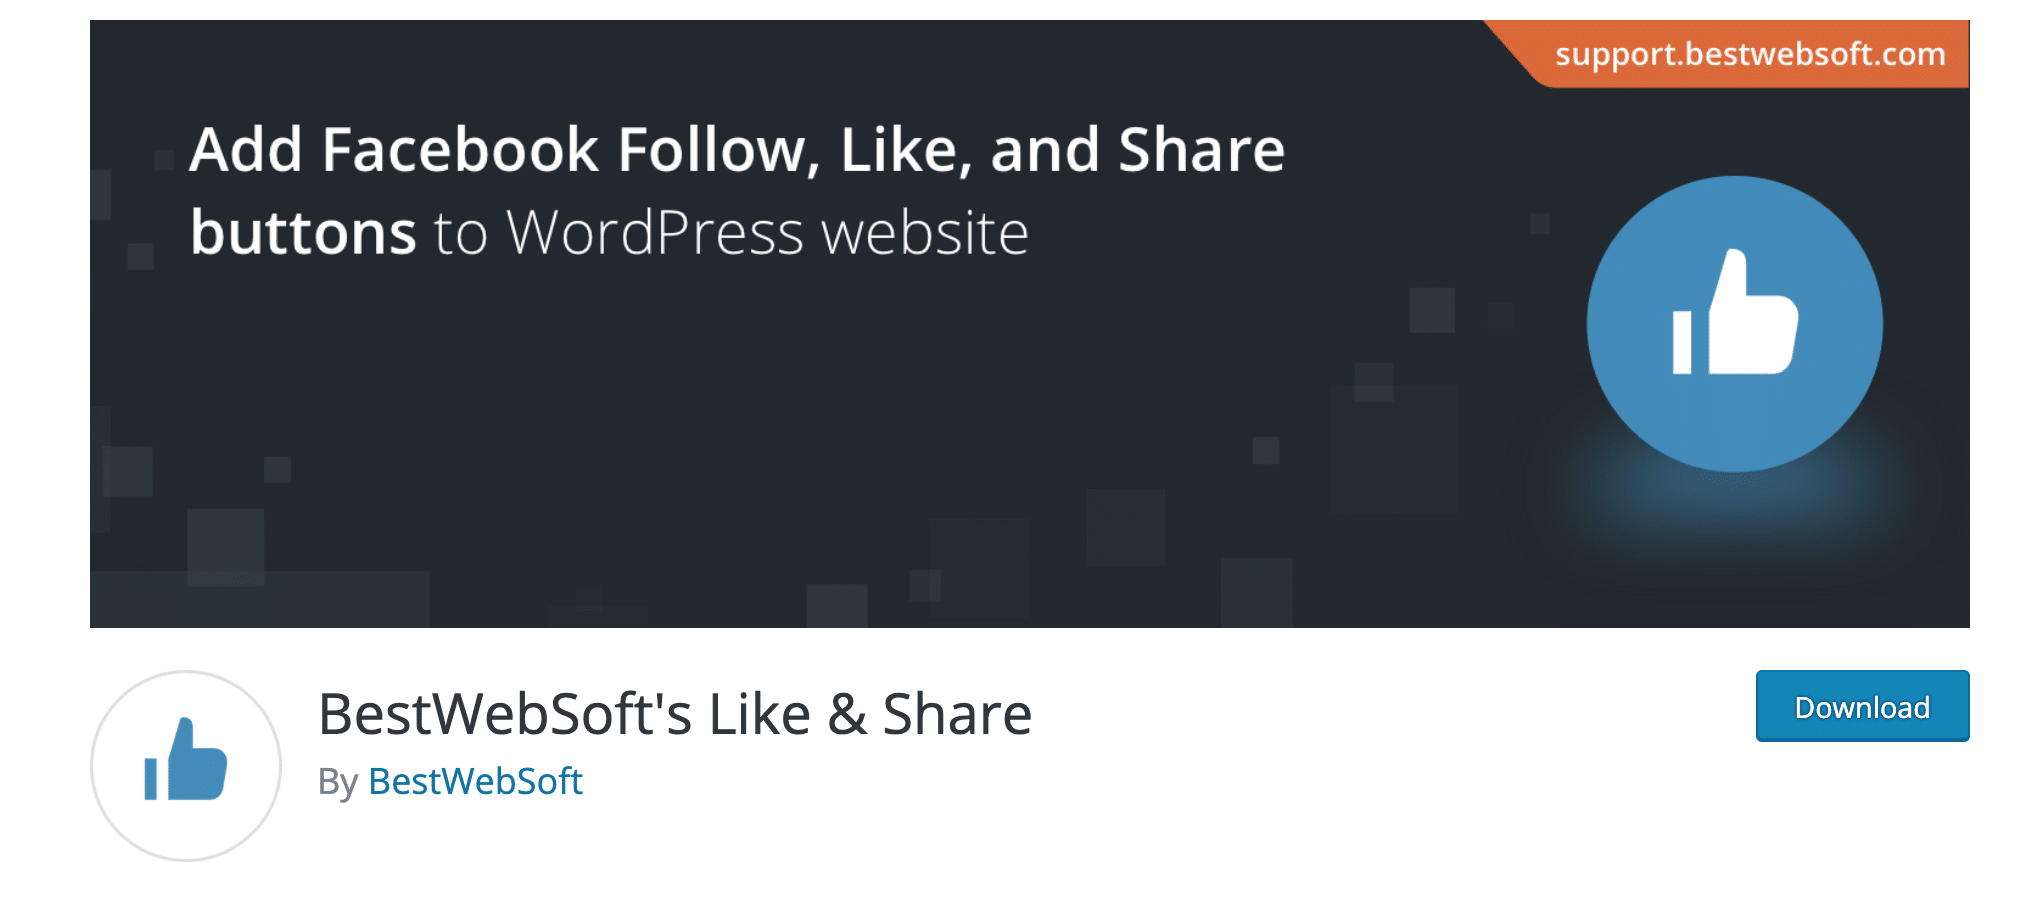 bestwebsoft's like & share